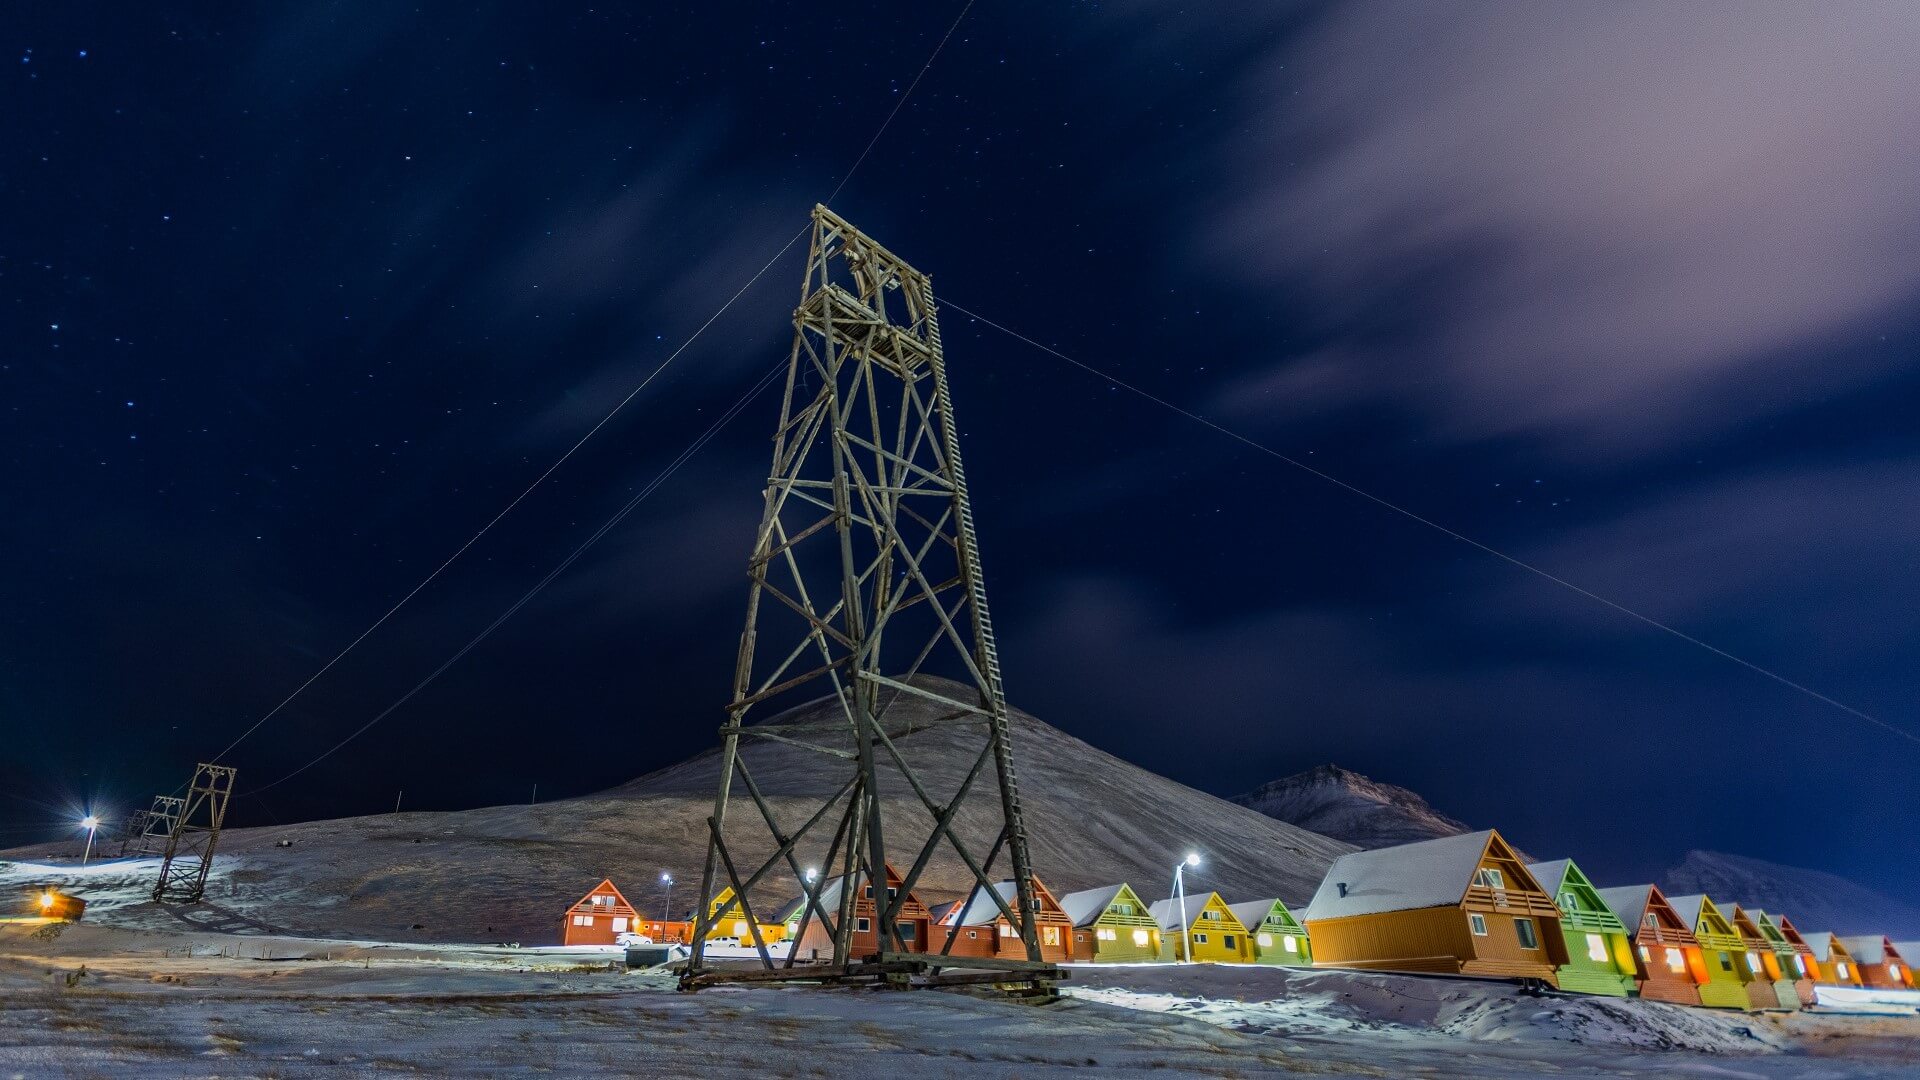 Arktis Tours - Polarnacht auf Spitzbergen - Longyearbyen